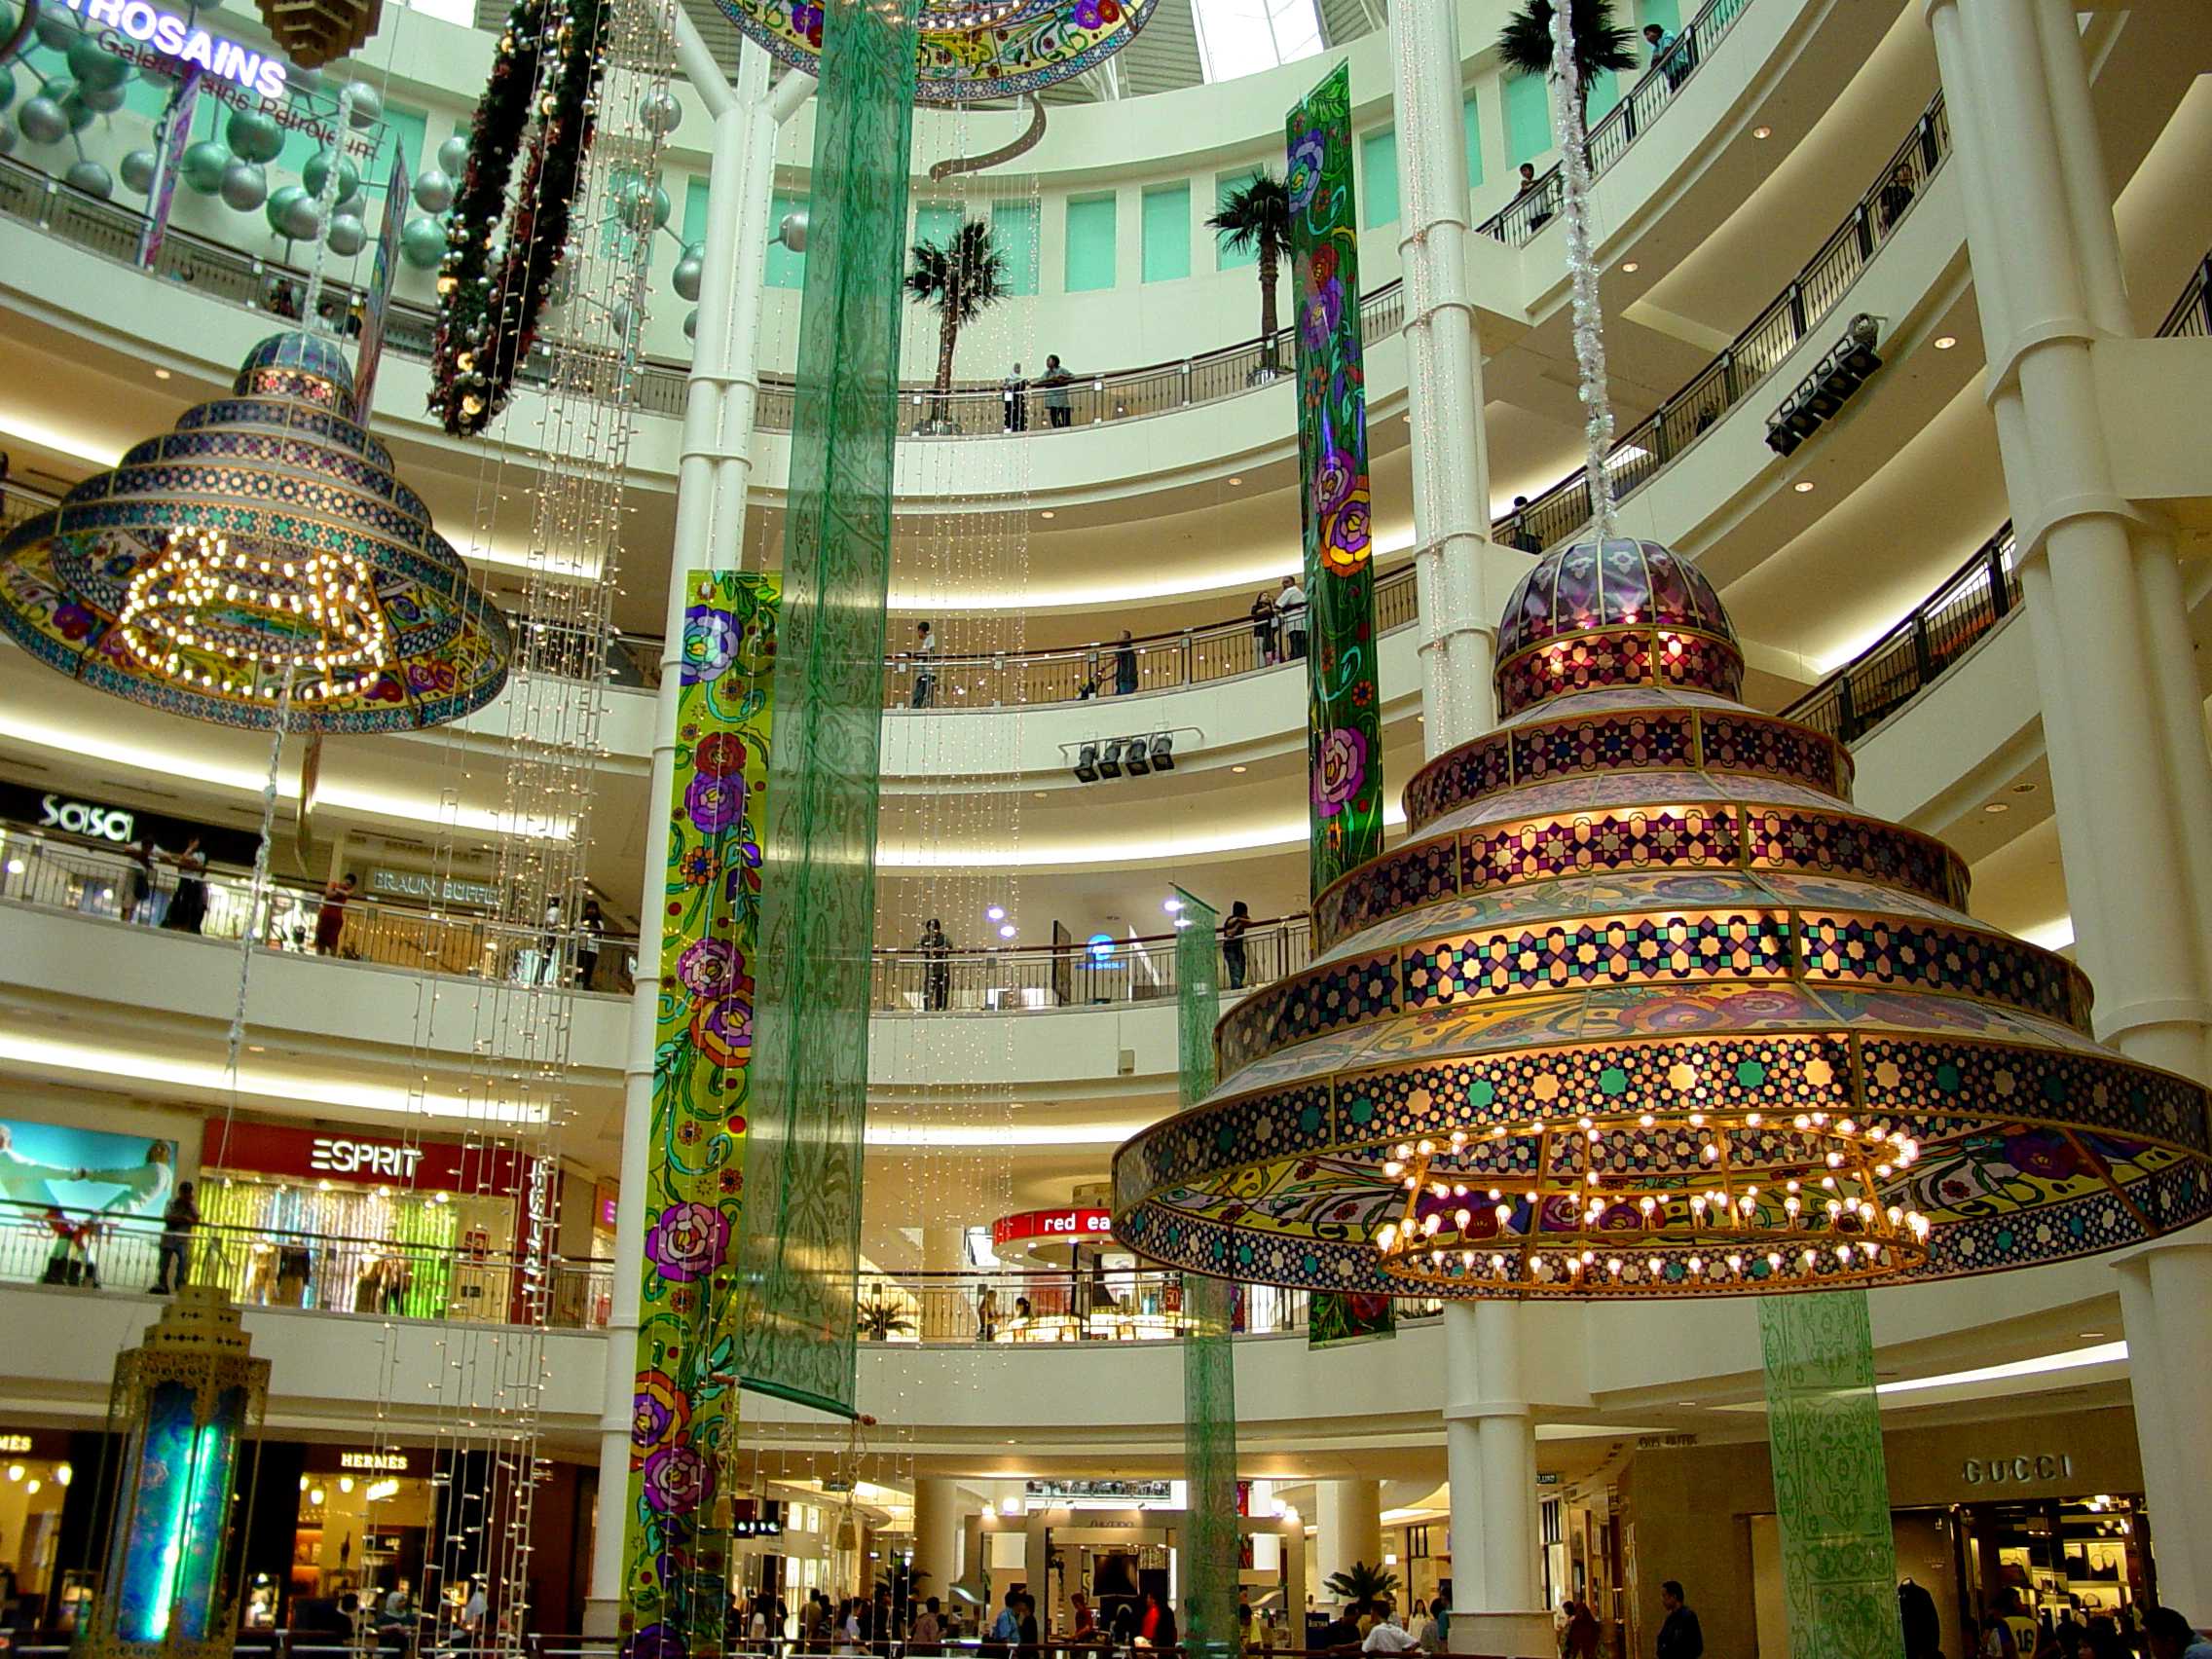 Petronas tower shopping center